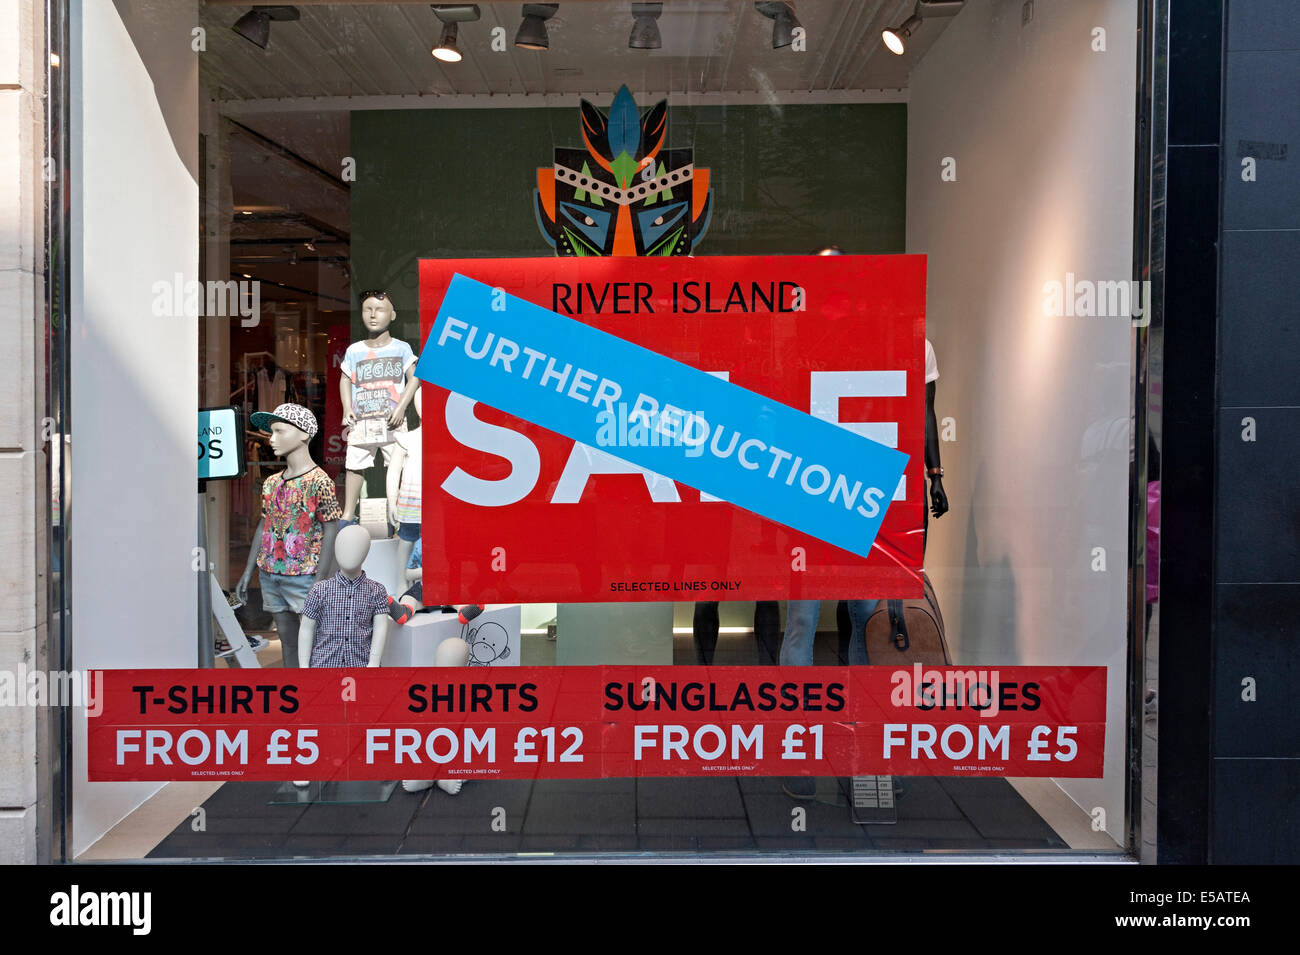 River island clothing fashion store sale sign nottingham Stock Photo